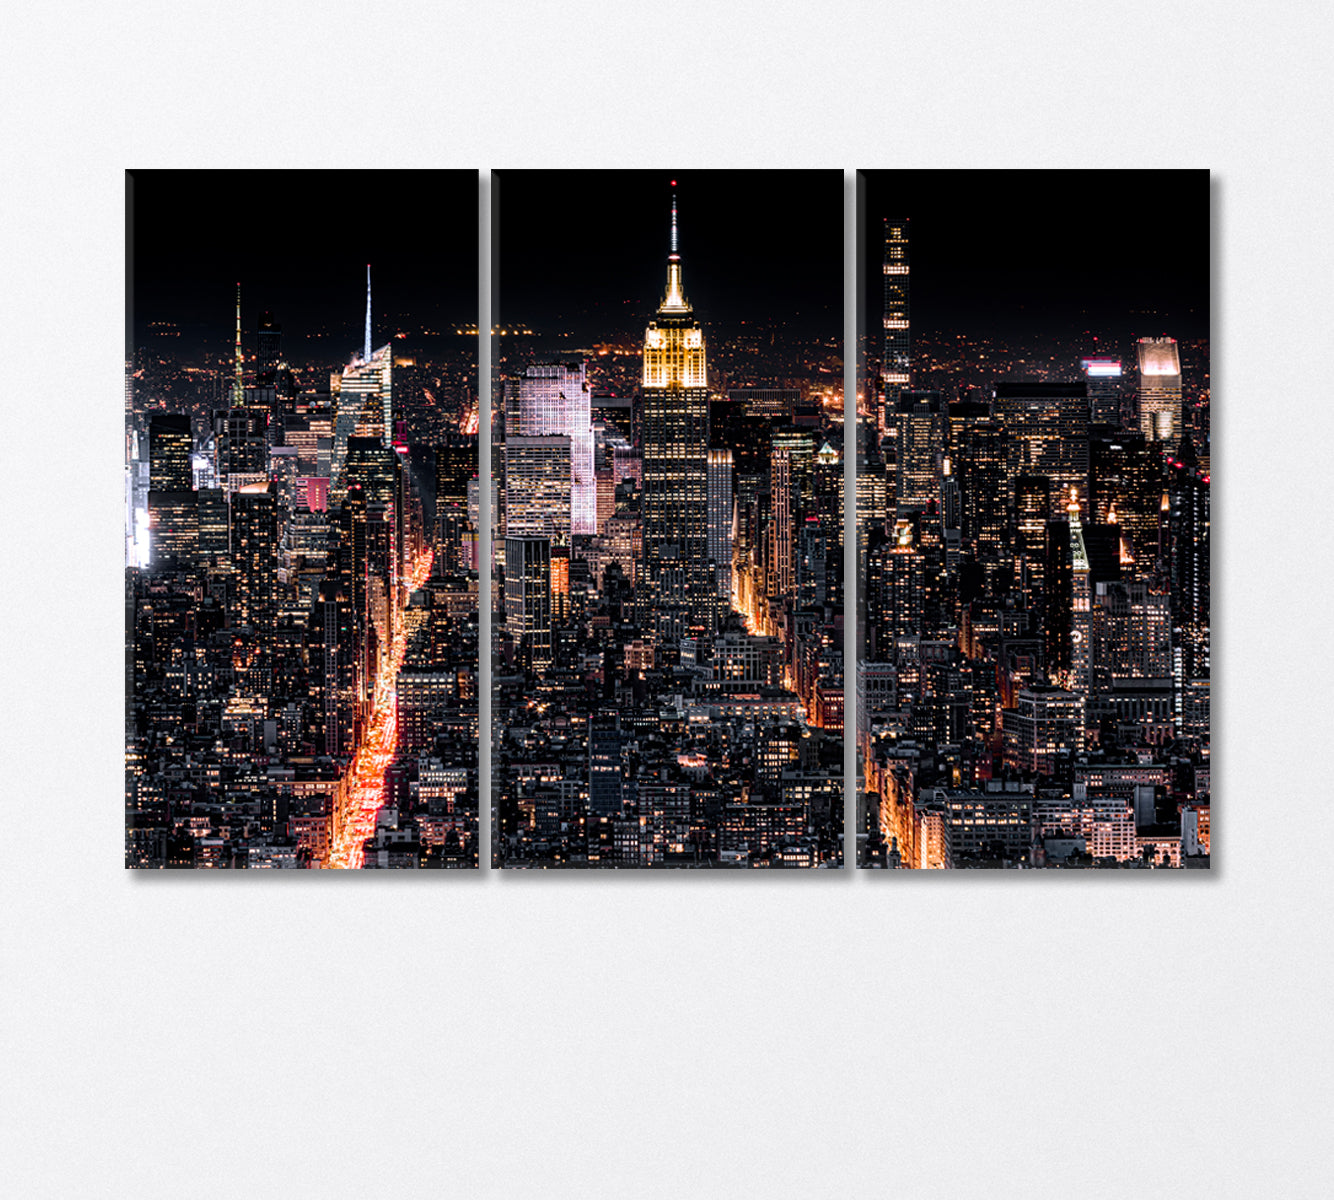 Night New York with Illuminated Avenues Canvas Print-Canvas Print-CetArt-3 Panels-36x24 inches-CetArt